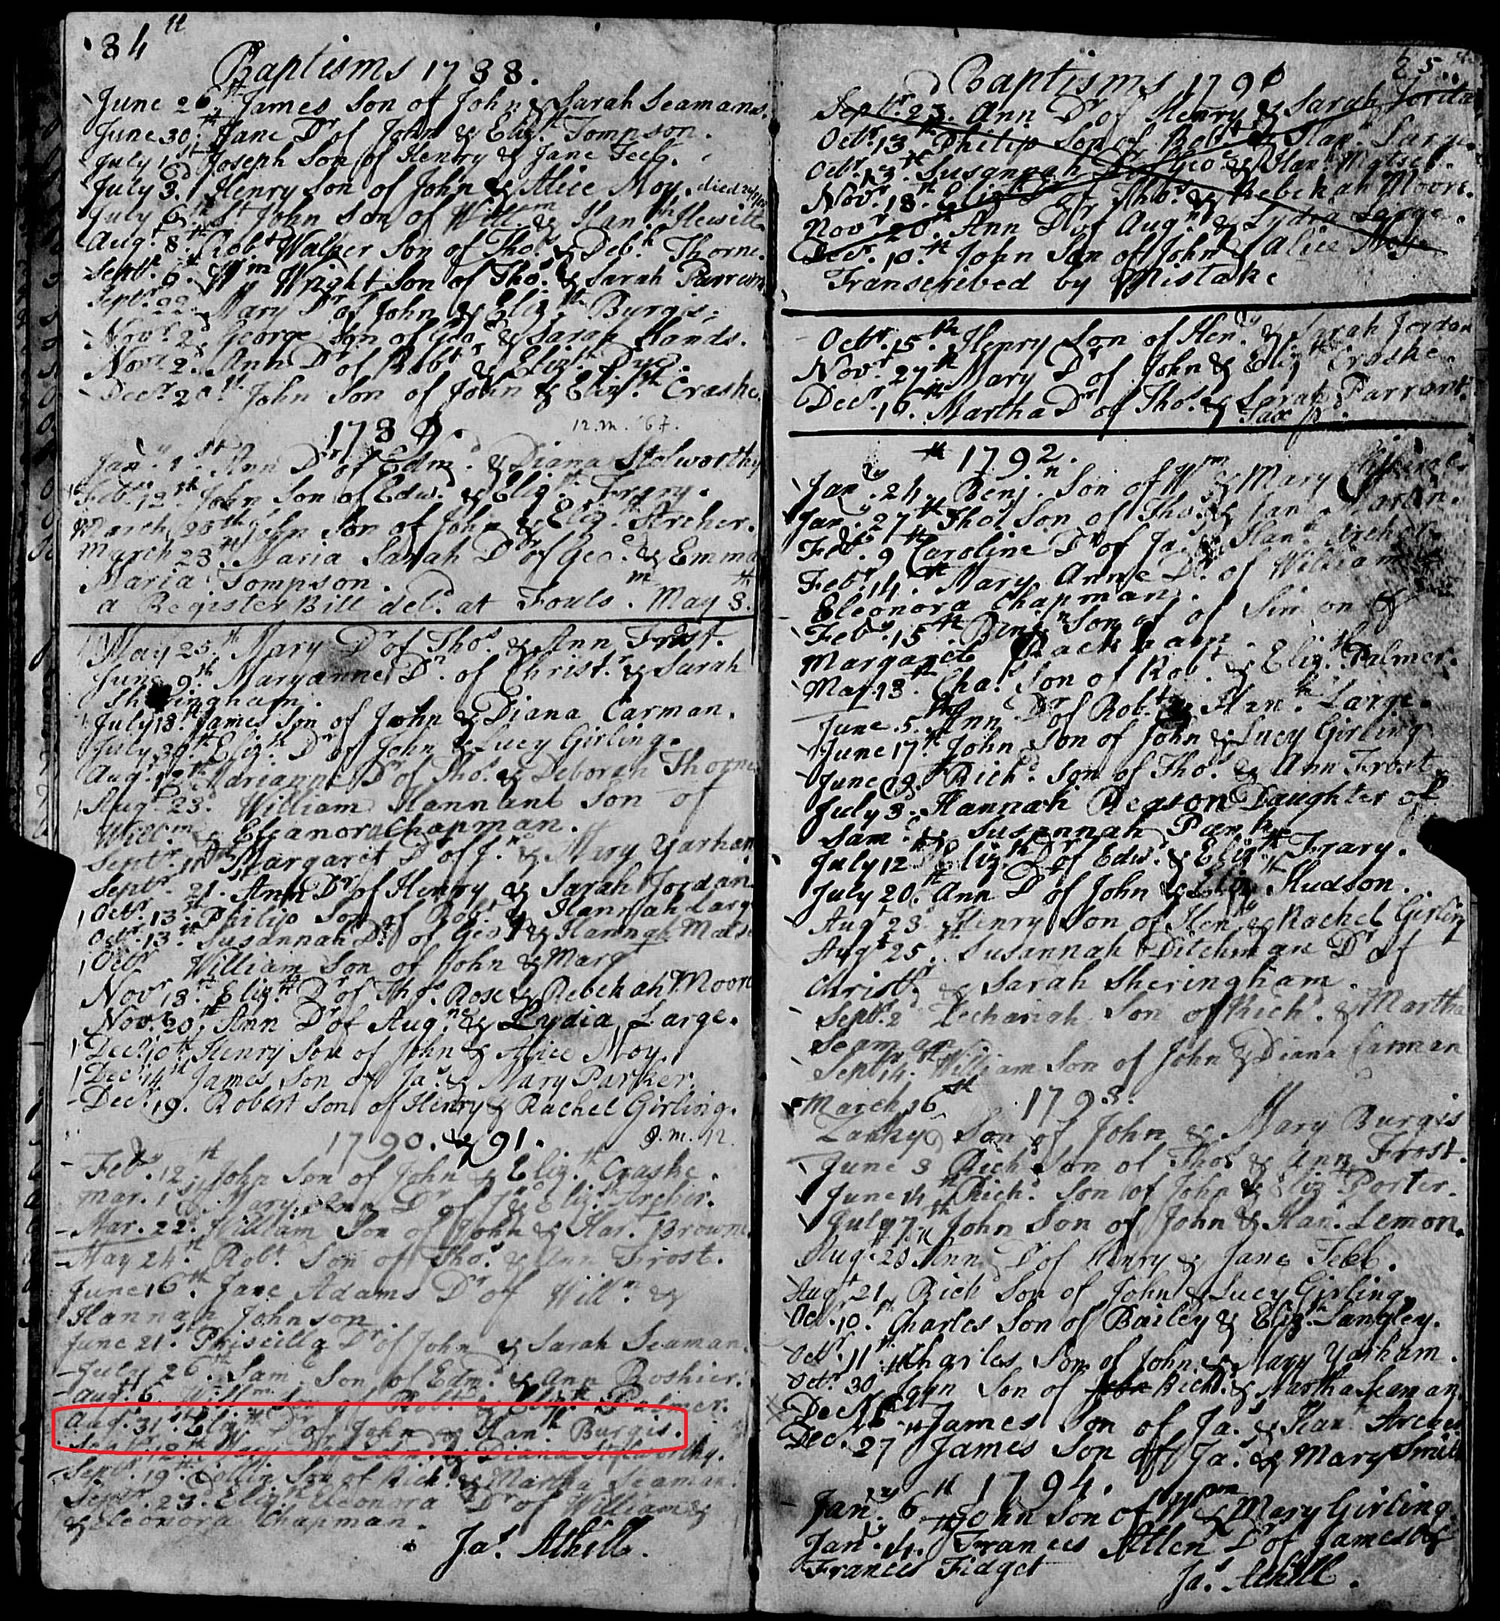 Foulsham, Norfolk parish register 1790